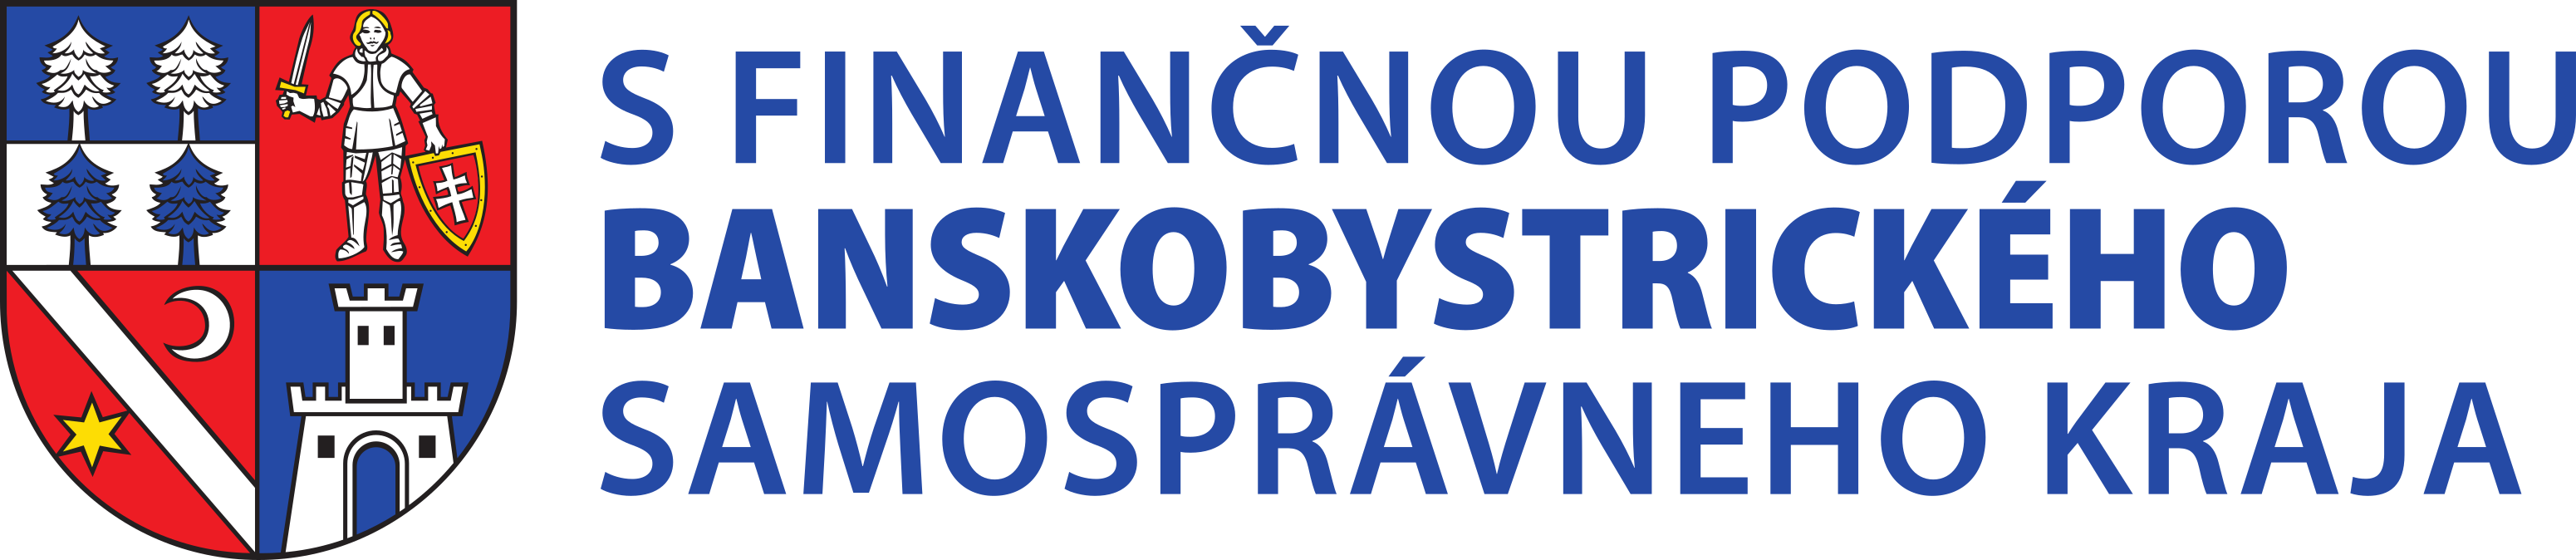 logo-bbsk_s-financnou-podporou.png